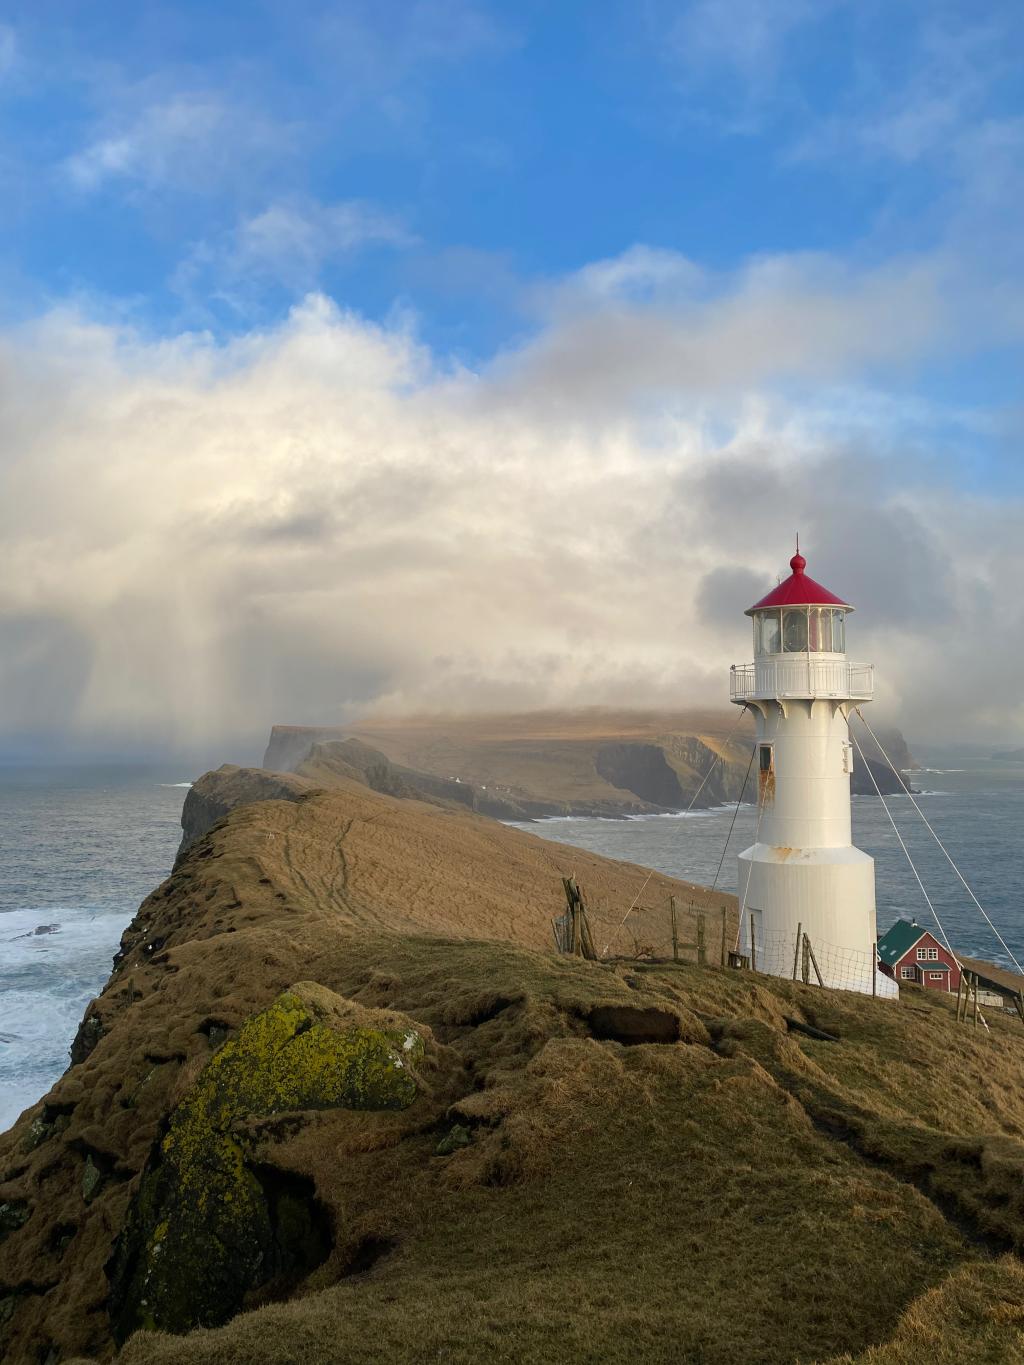 The lighthouse of the islet of Mykineshólmur.
Image by Sóley Kerlok 2023.